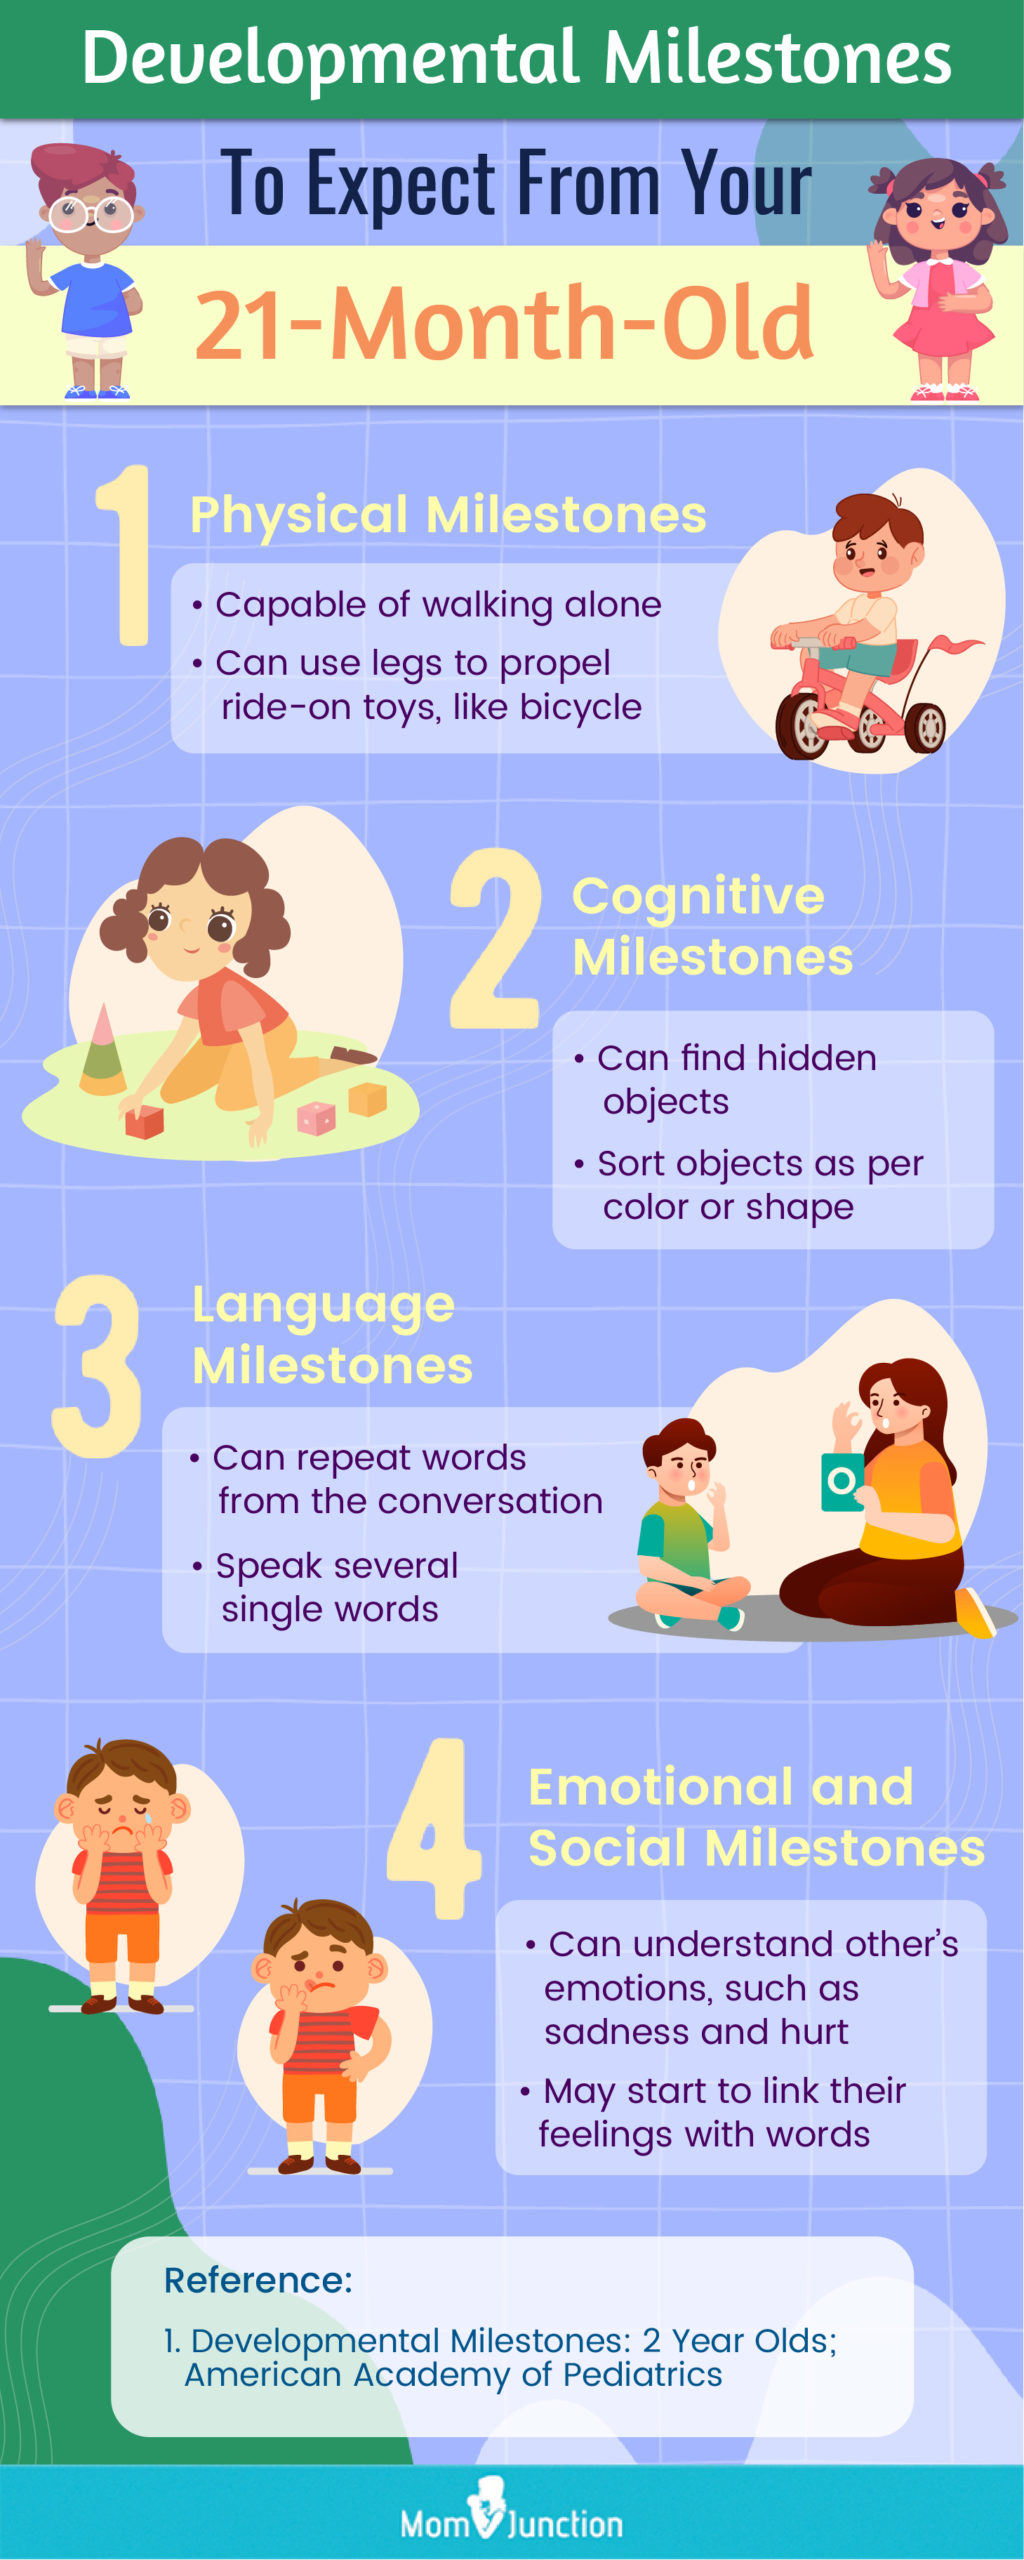 2-Year-Old Developmental Milestone Checklist for Your Toddler